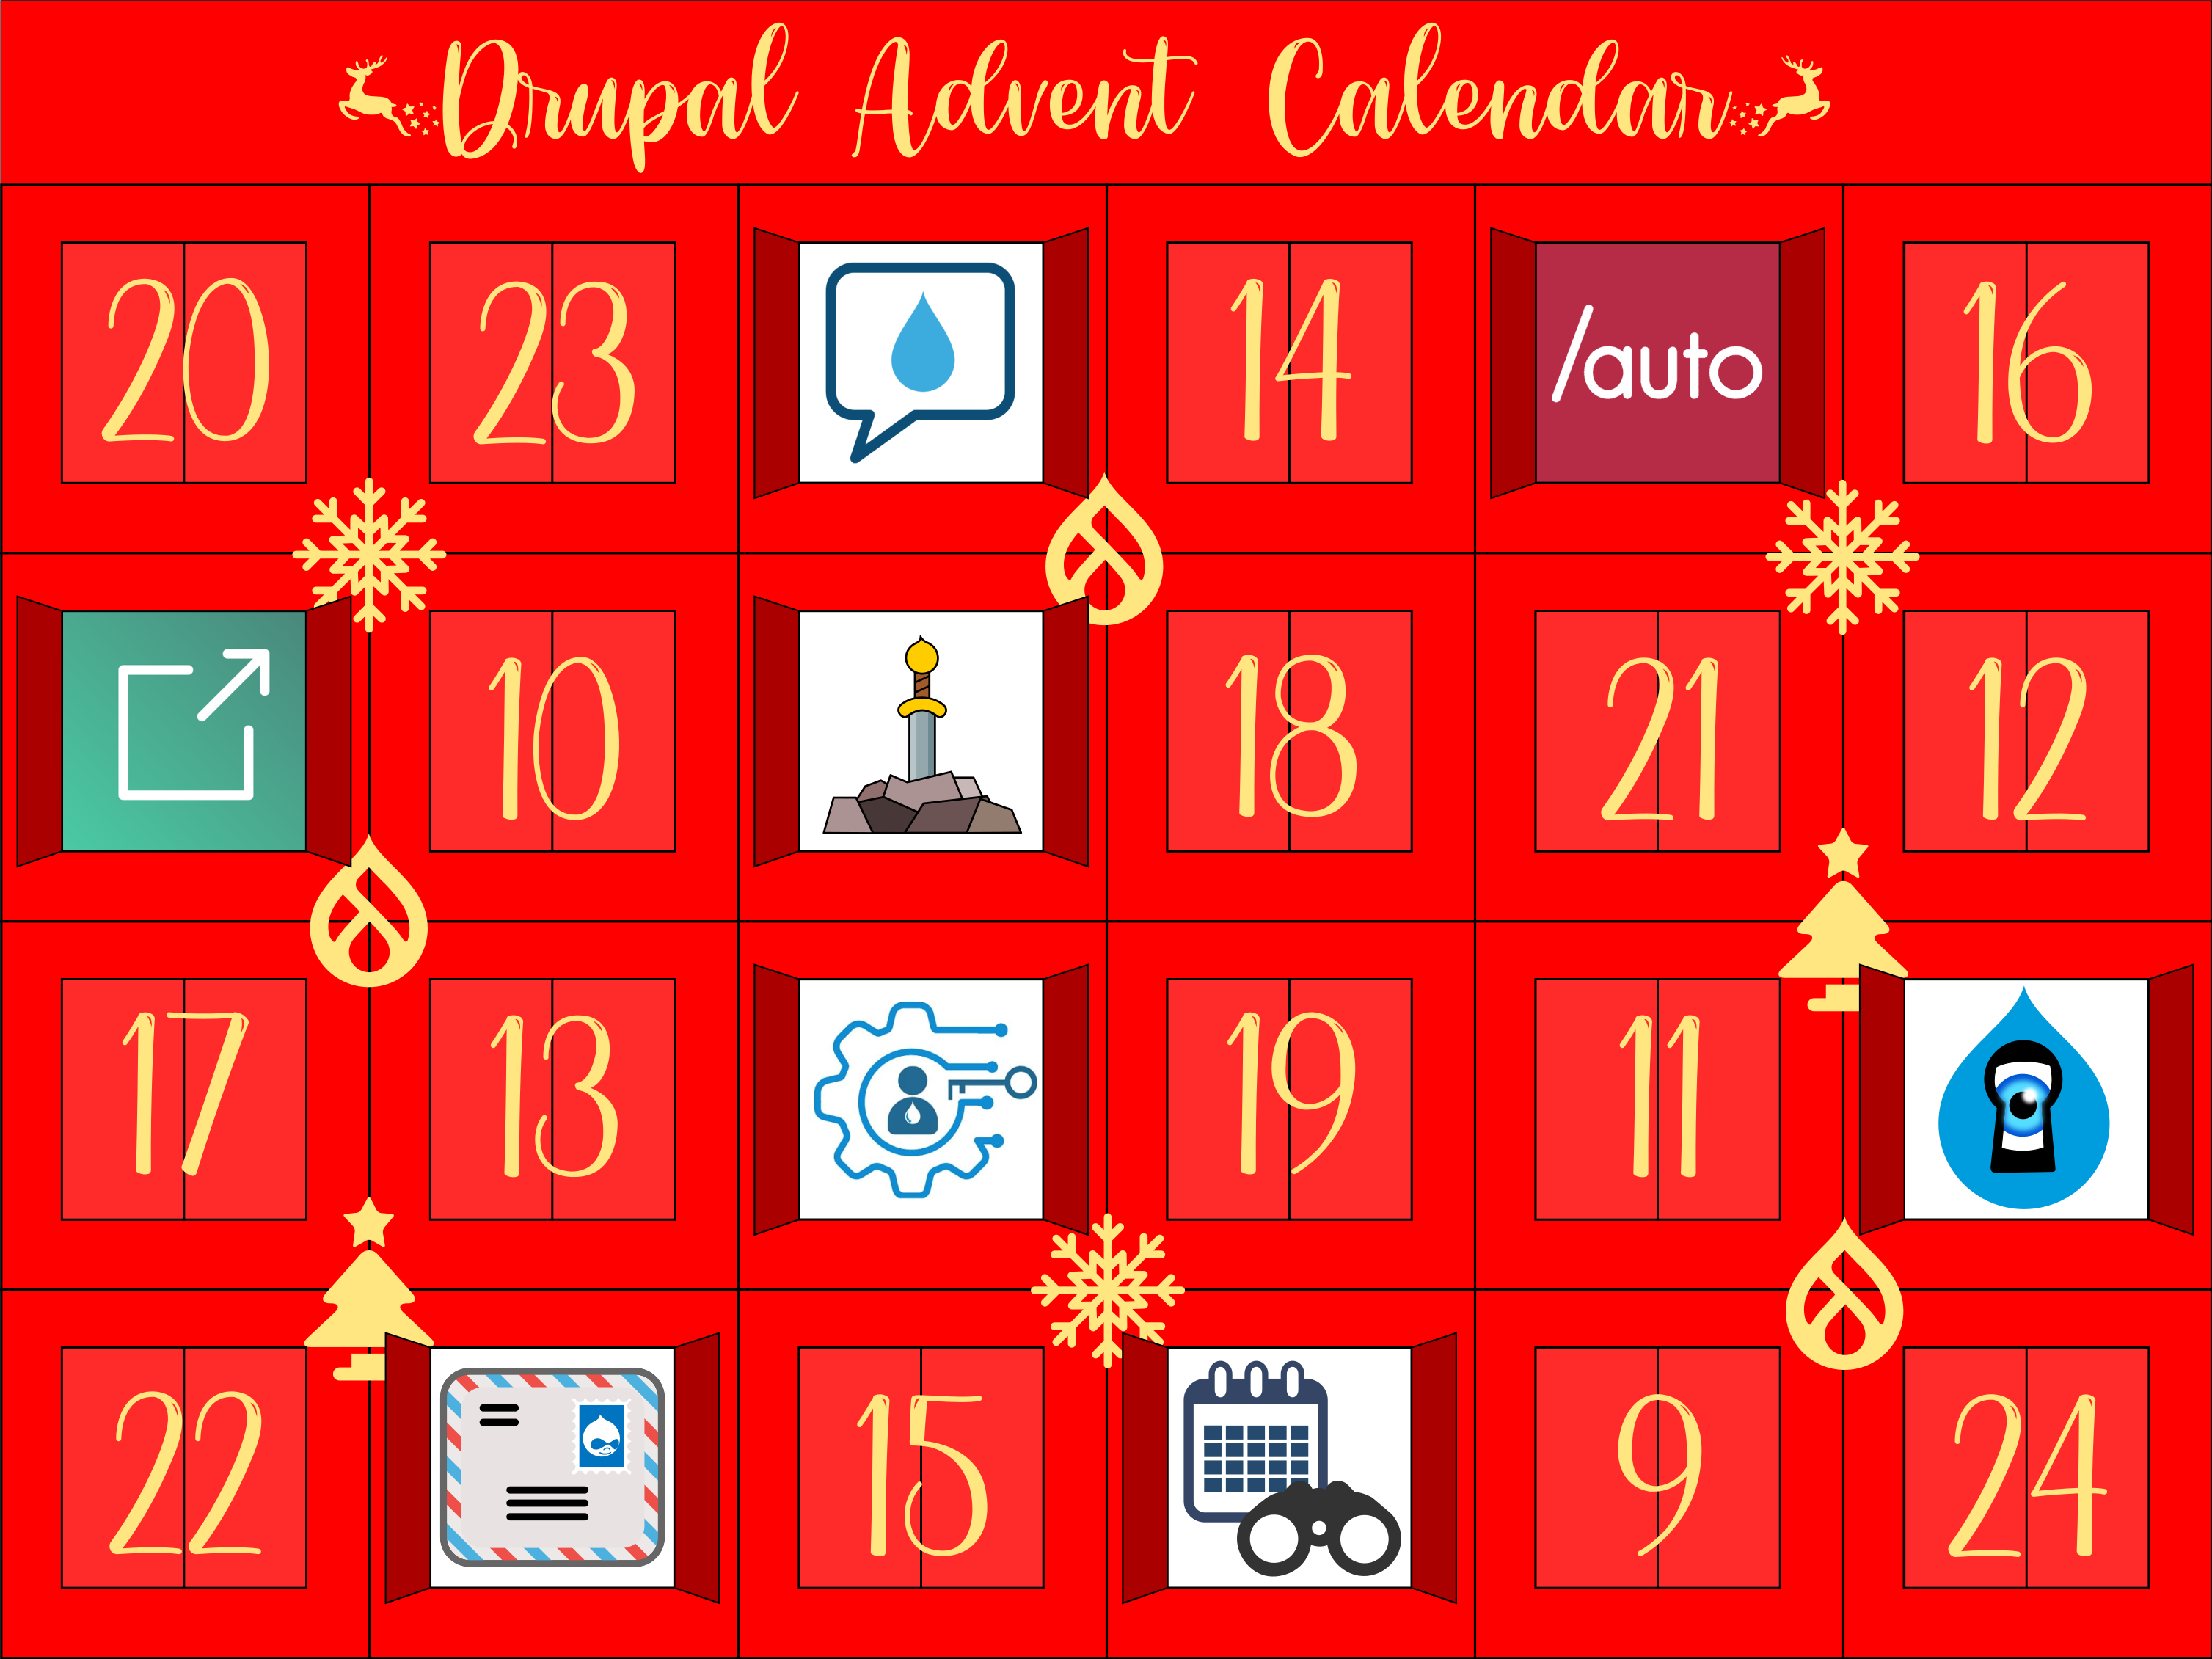 Advent Calendar with door 8 open, revealing Chosen module